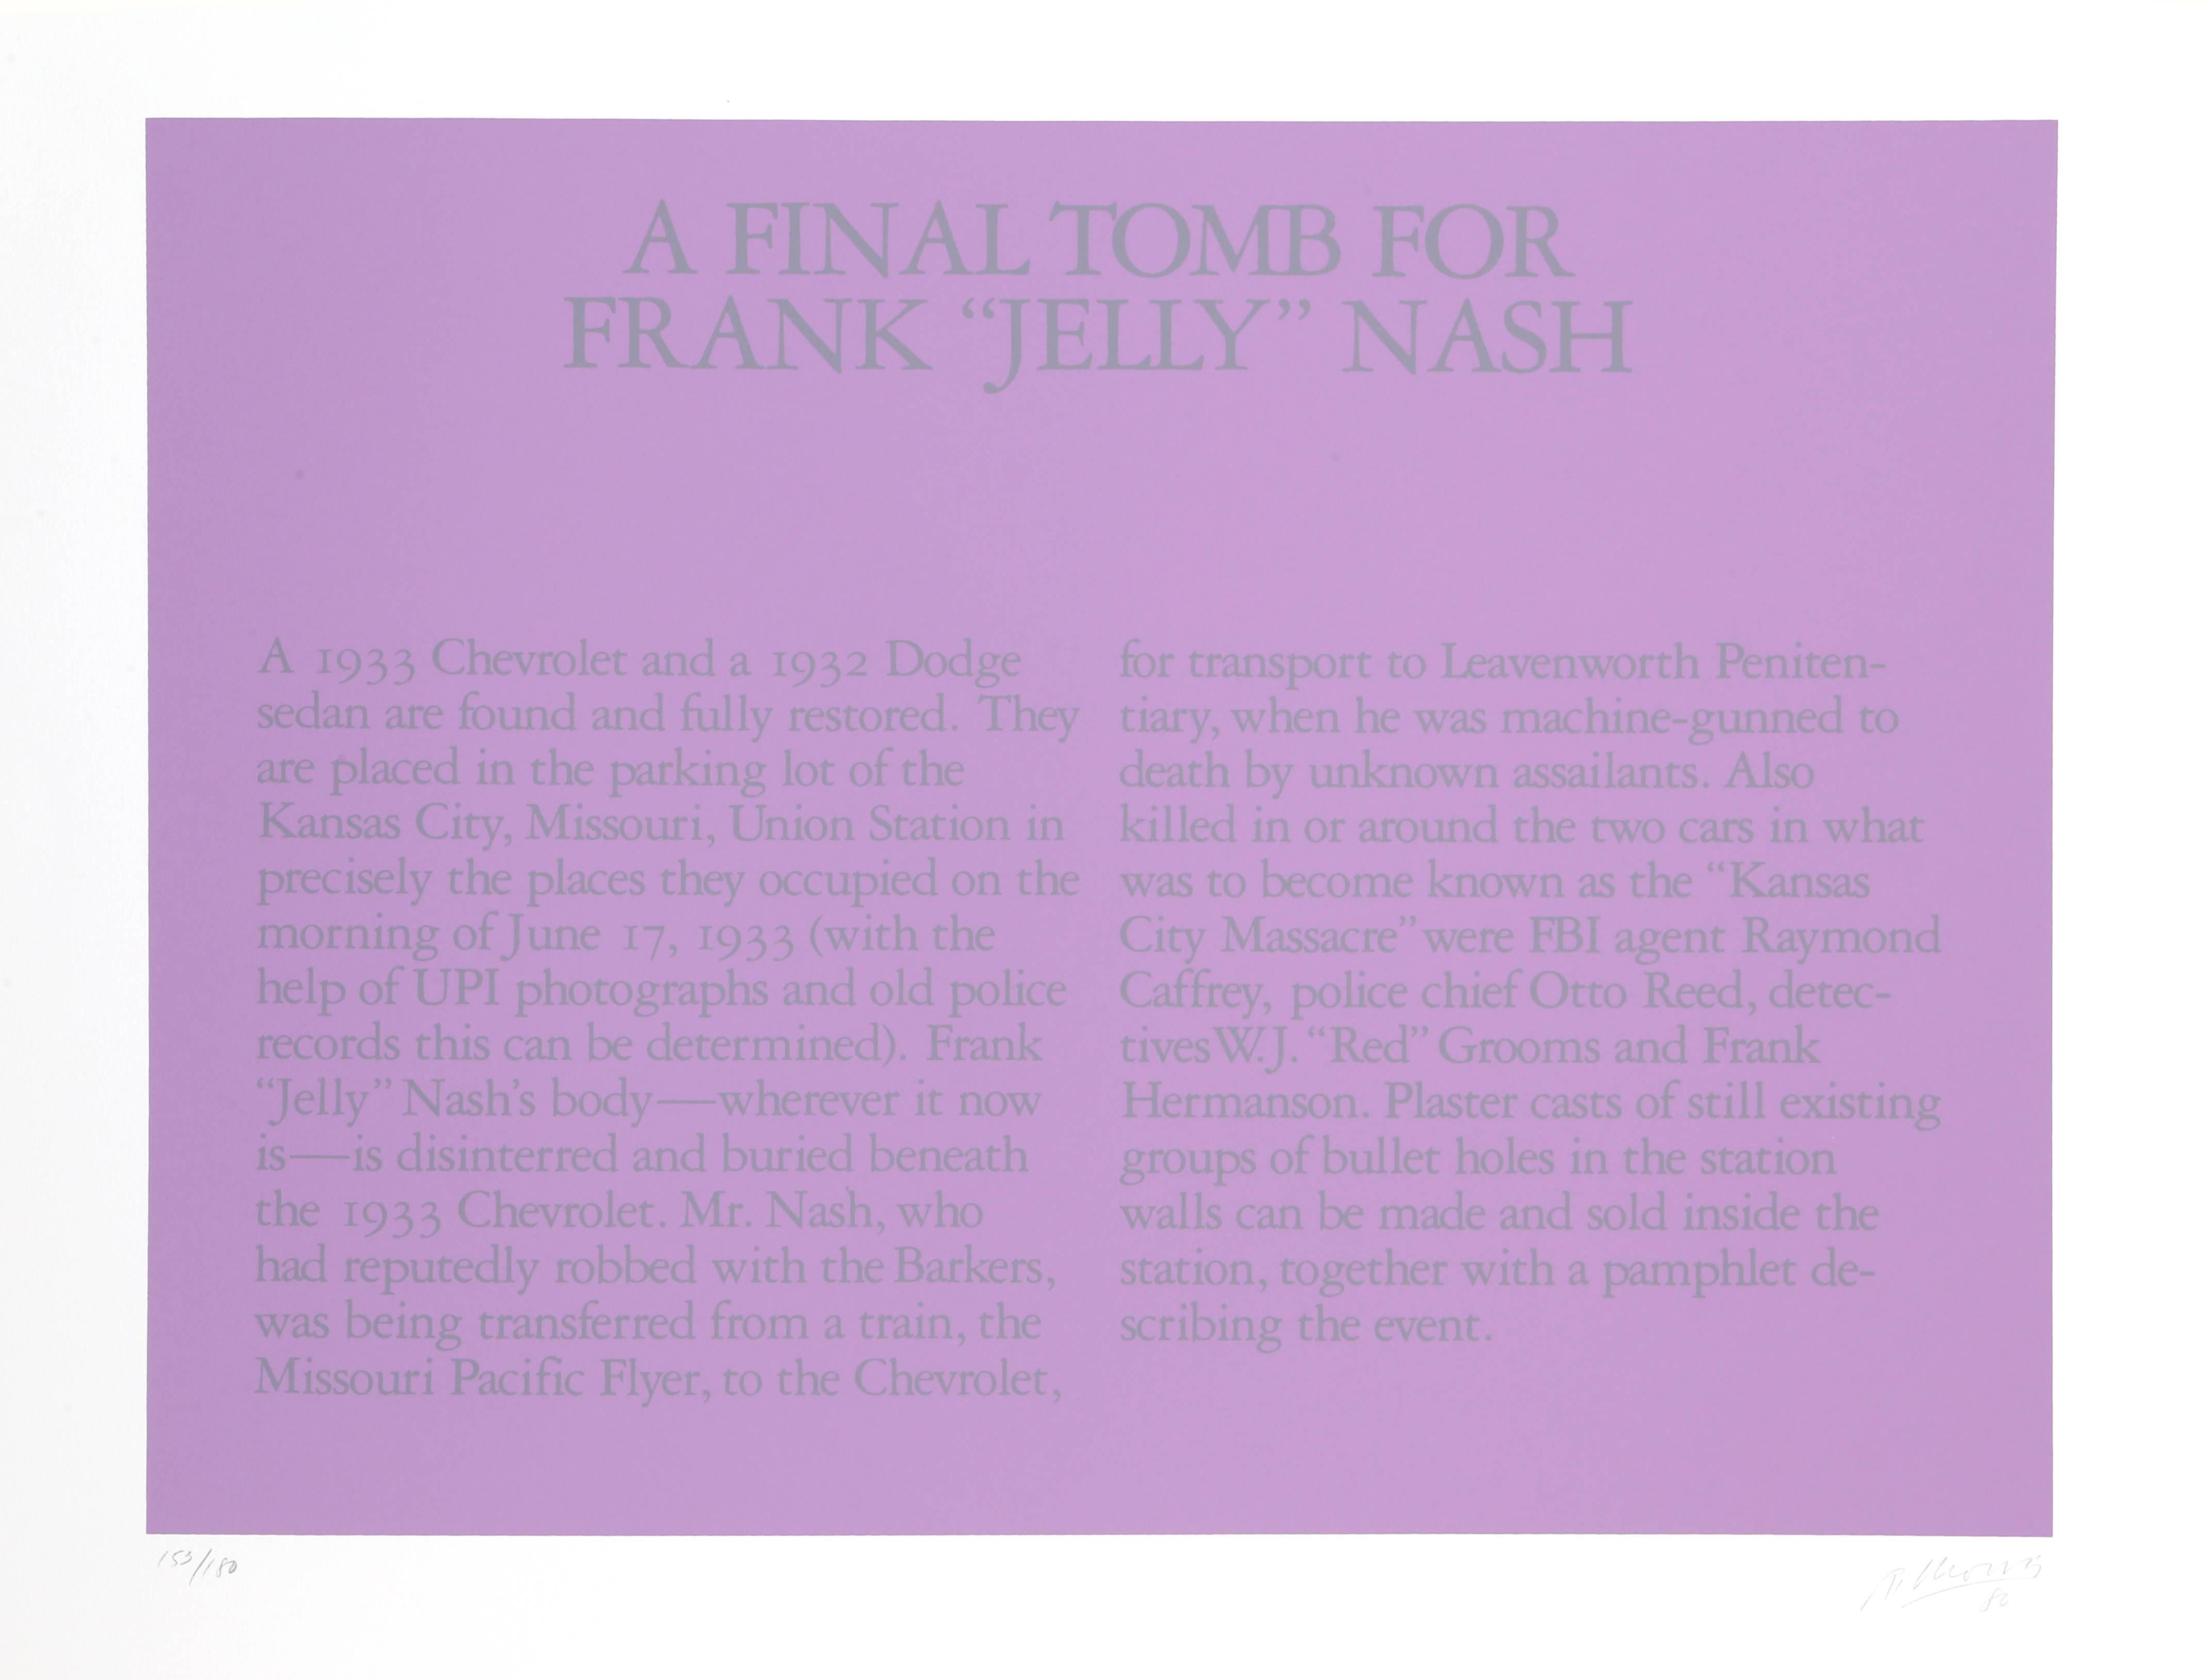 frank jelly nash